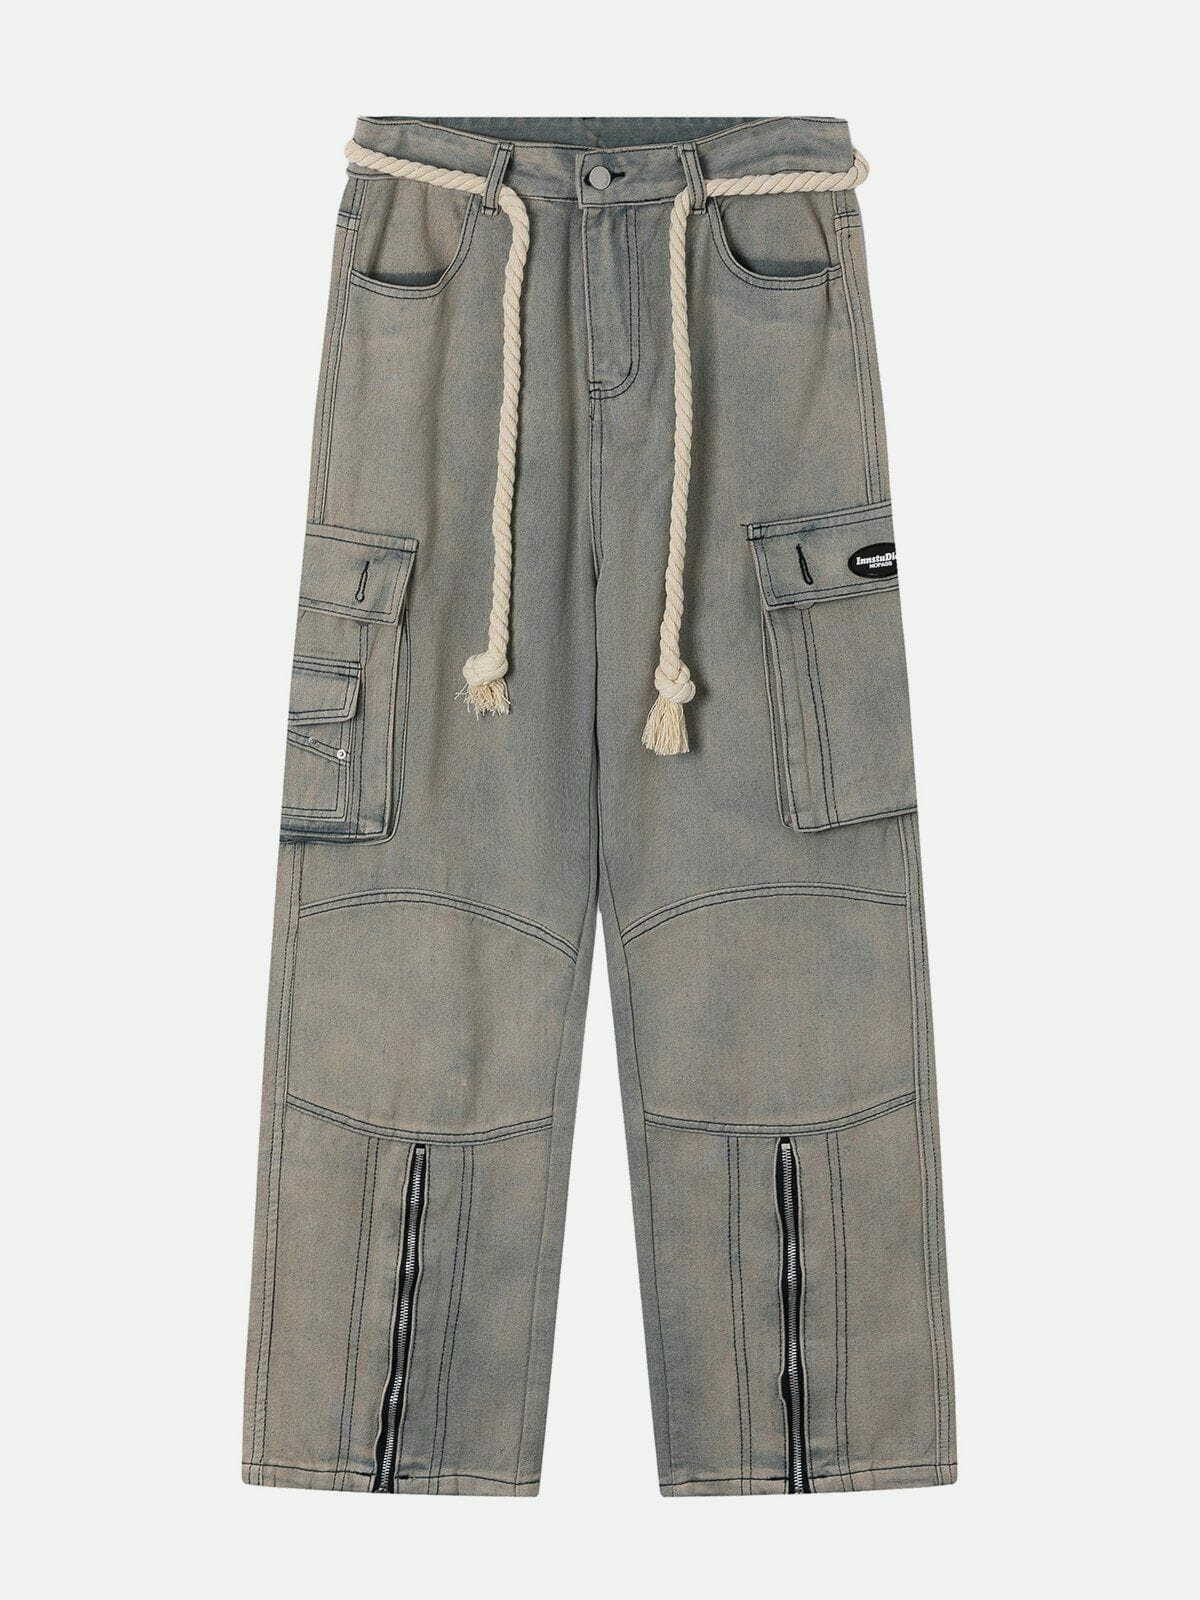 edgy rope decor jeans   sleek & youthful streetwear look 5392